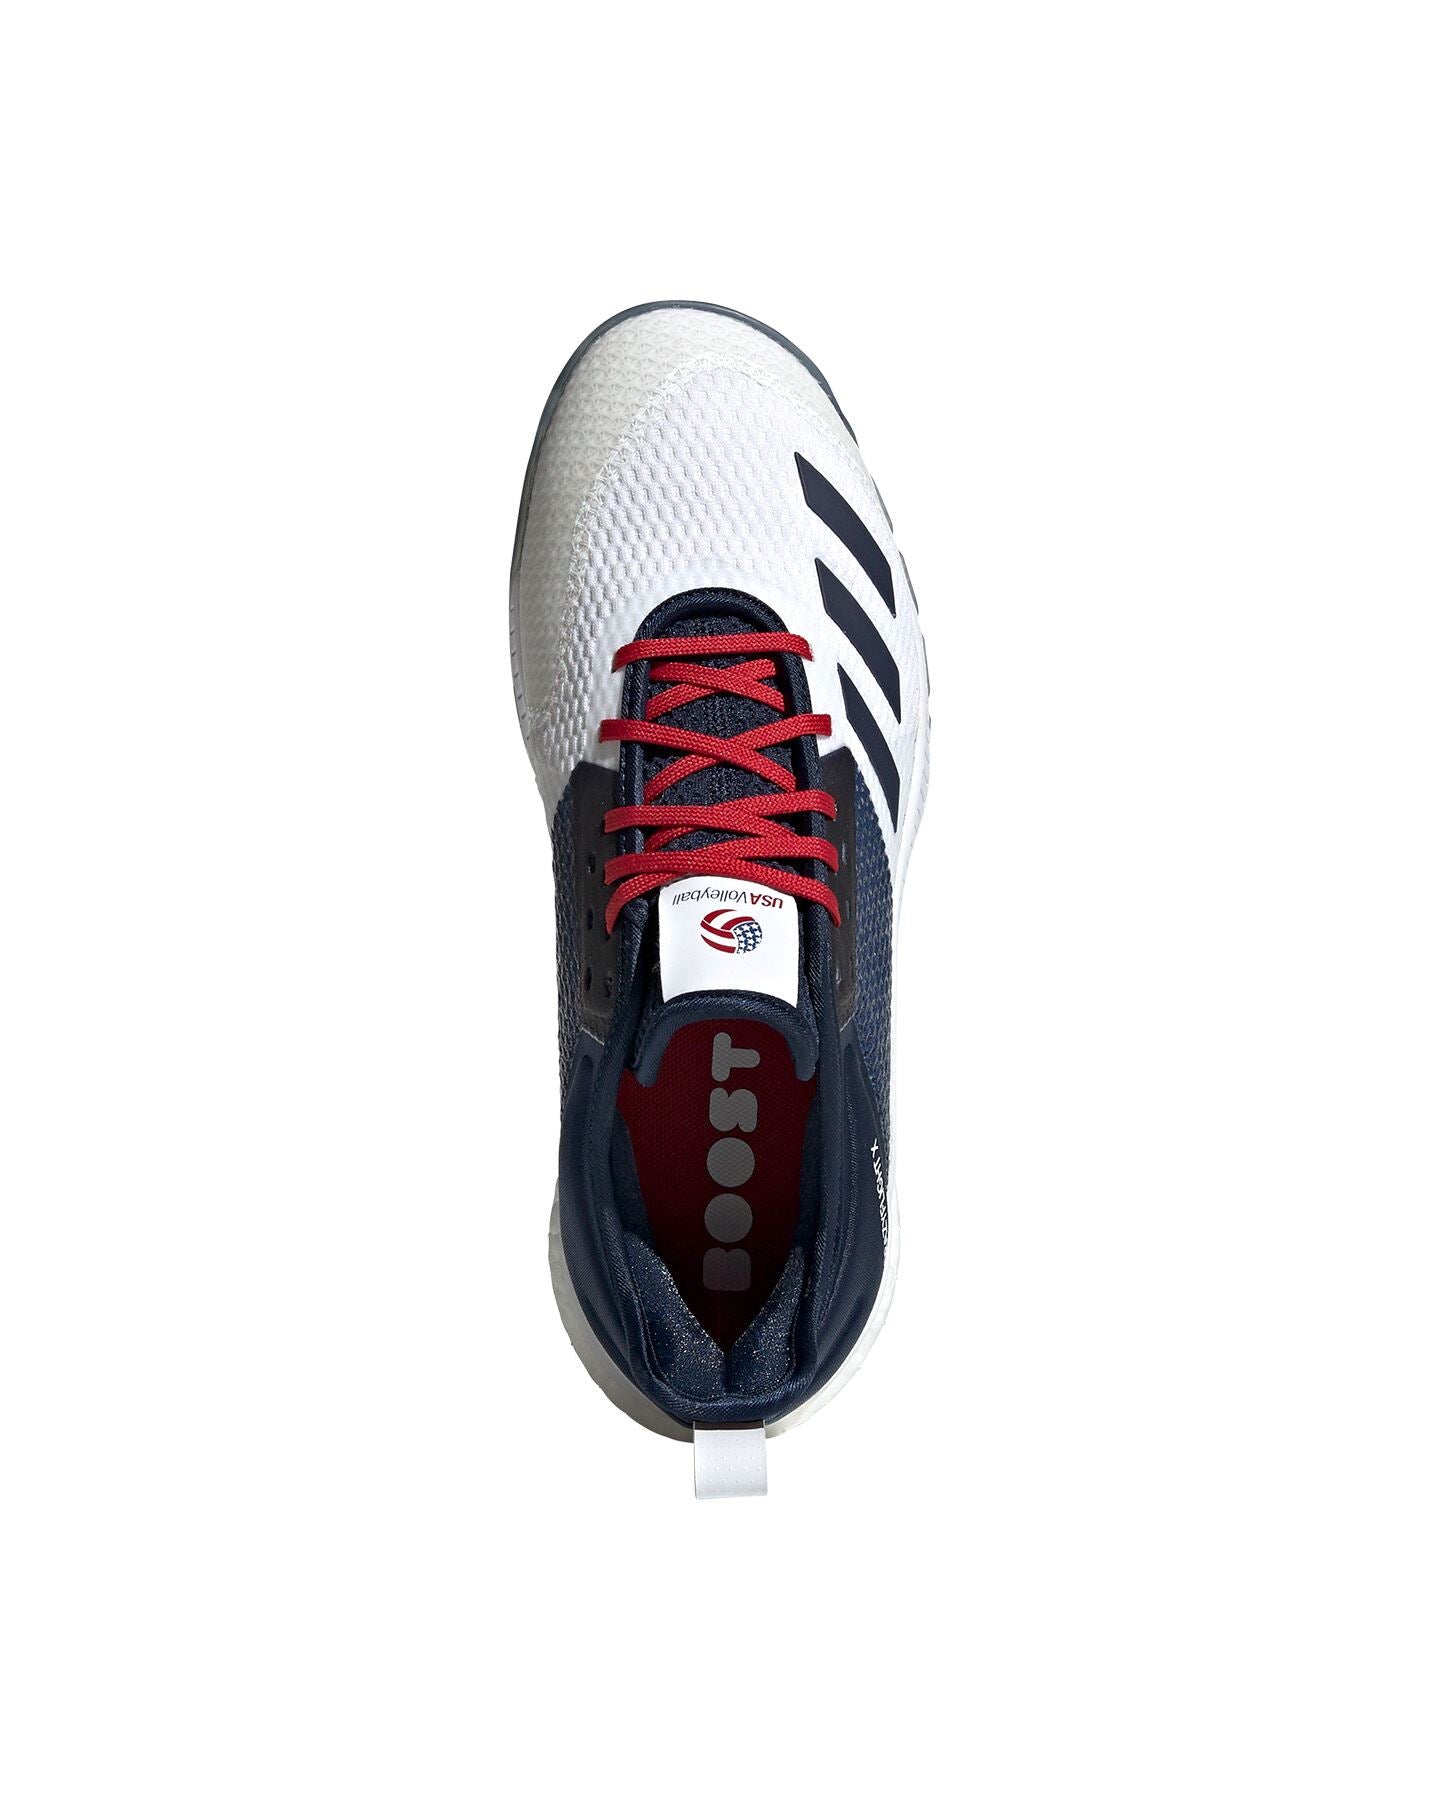 Adidas Scarpe Volley Uomo - CRAZYFLIGHT X 3 USAV - D97836